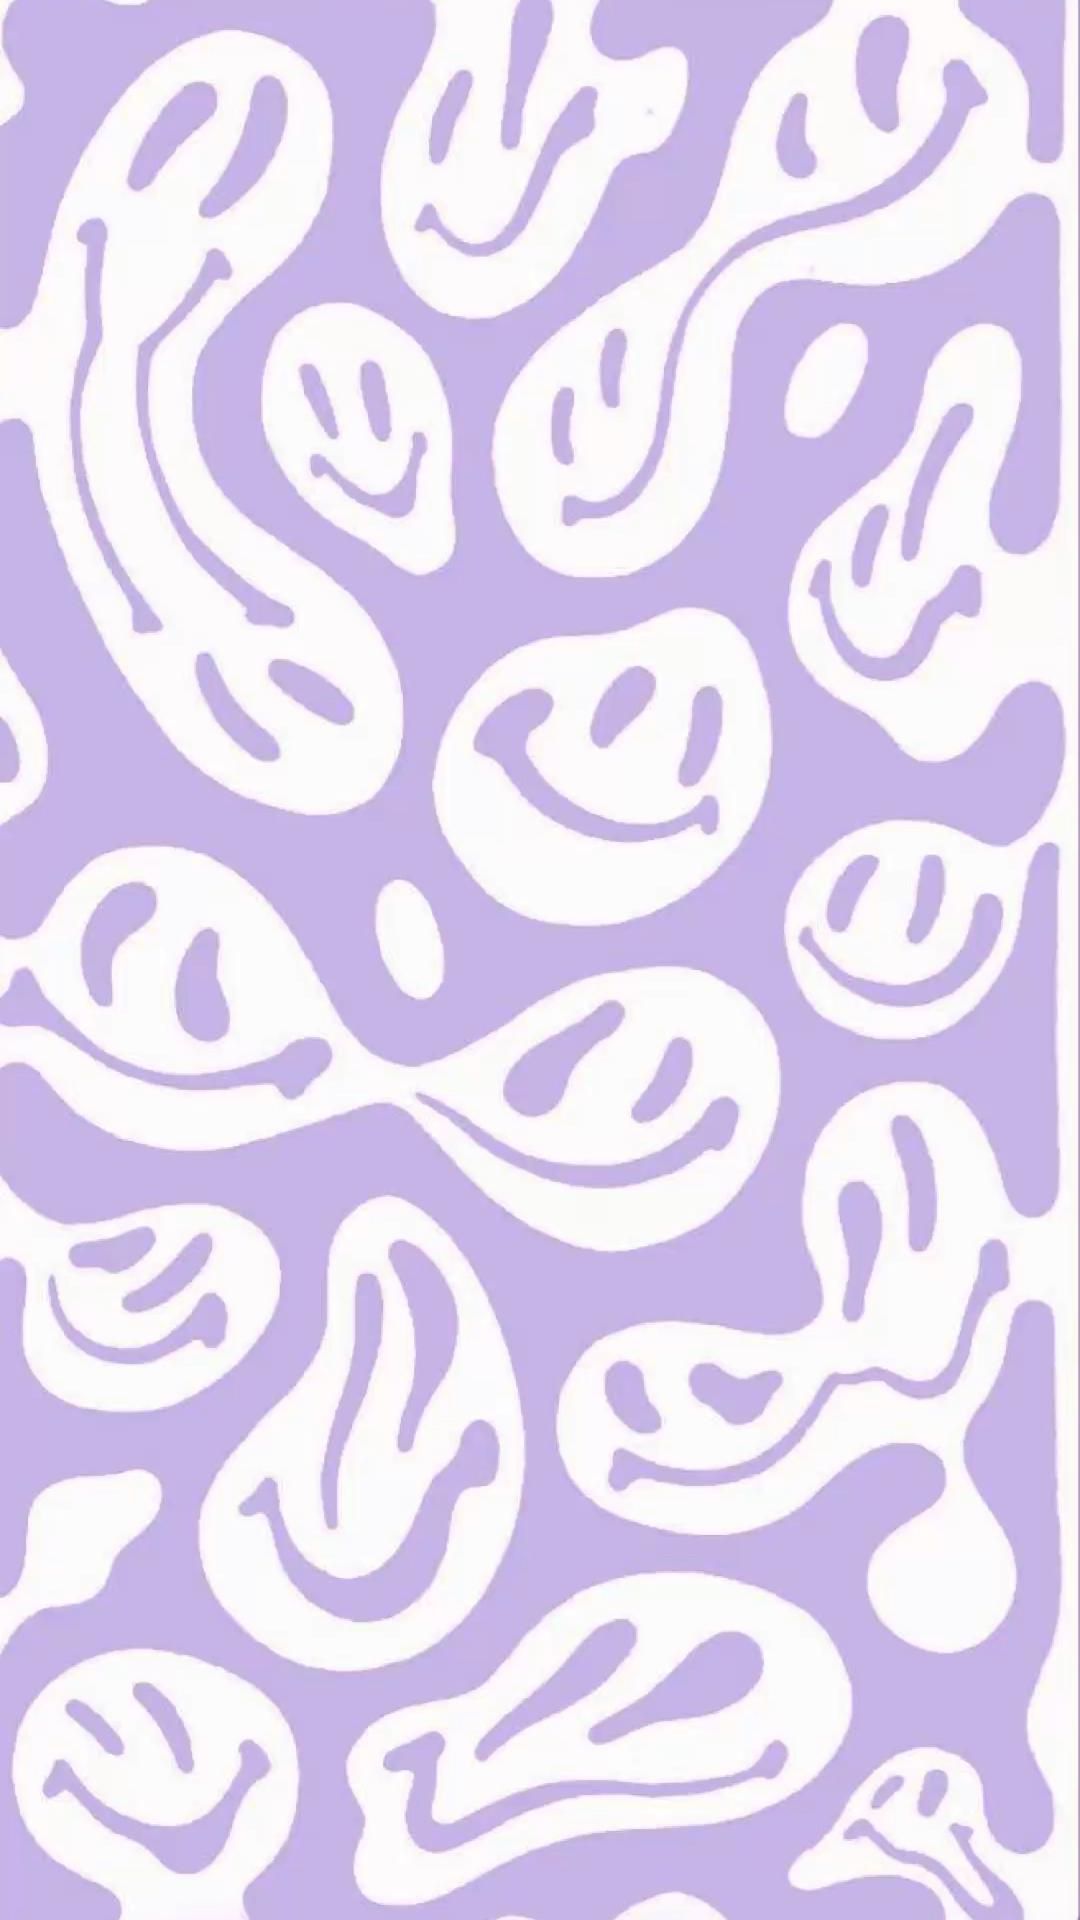 IPhone wallpaper • Aesthetic wallpaper • purple and white background • phone background • phone wallpaper • background for phone • background for phone - Pastel purple